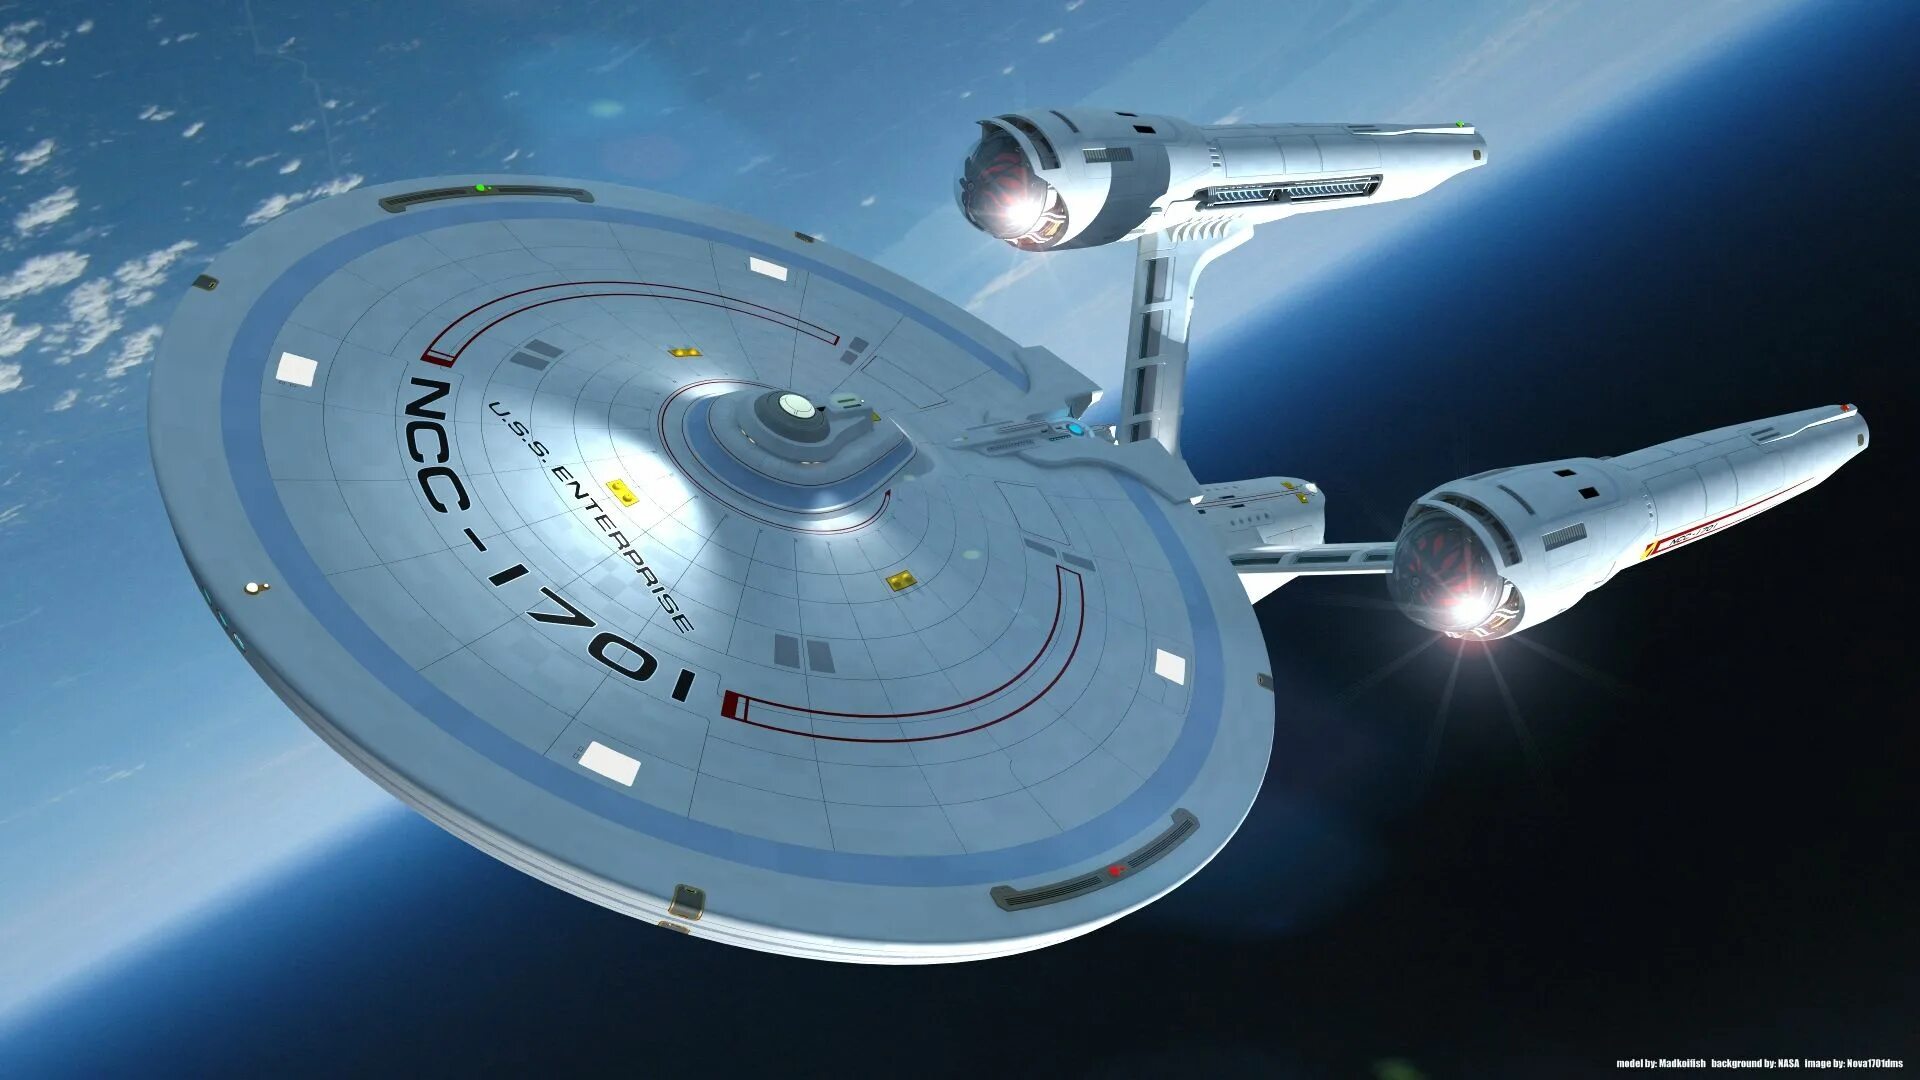 Enterprise egamers. Enterprise Star Trek корабль. Энтерпрайз 1701 е. Star Trek Enterprise NCC 1701 E.